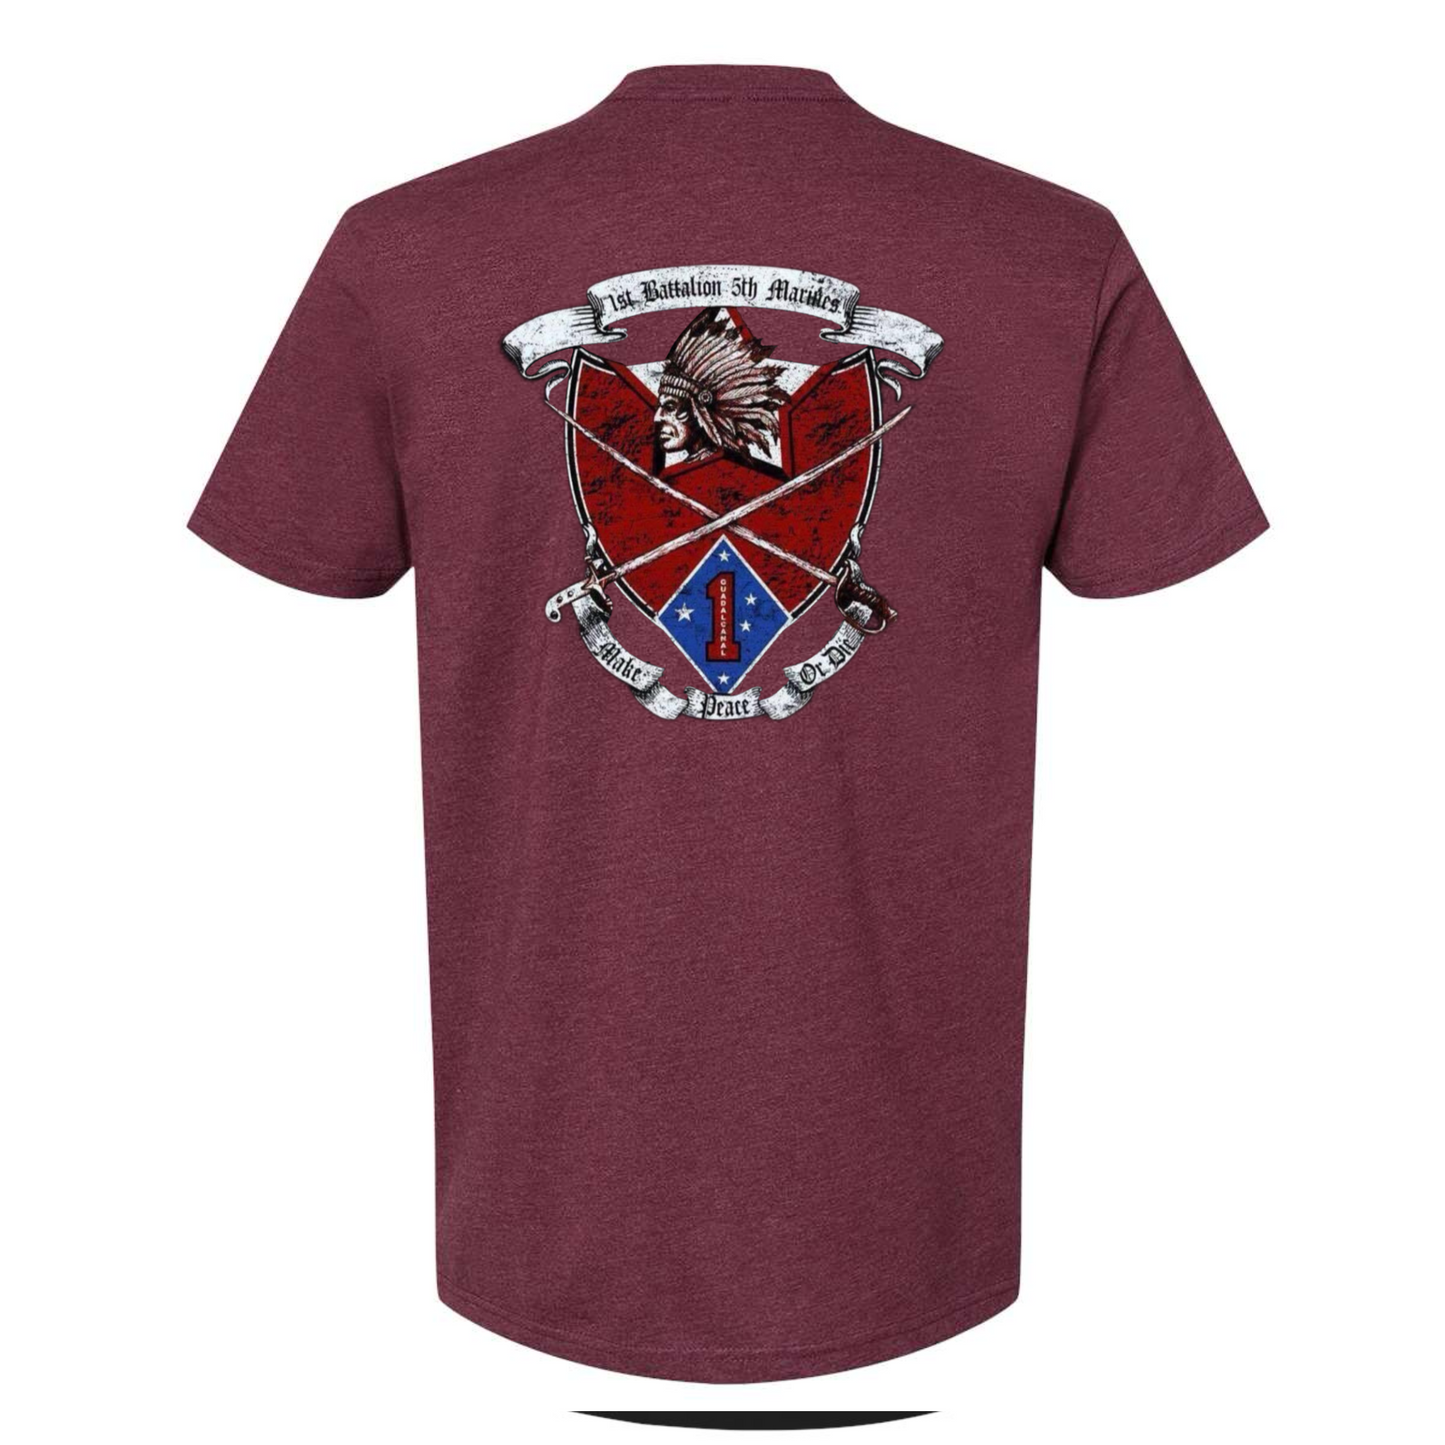 1st Battalion 5th Marines unit shirt